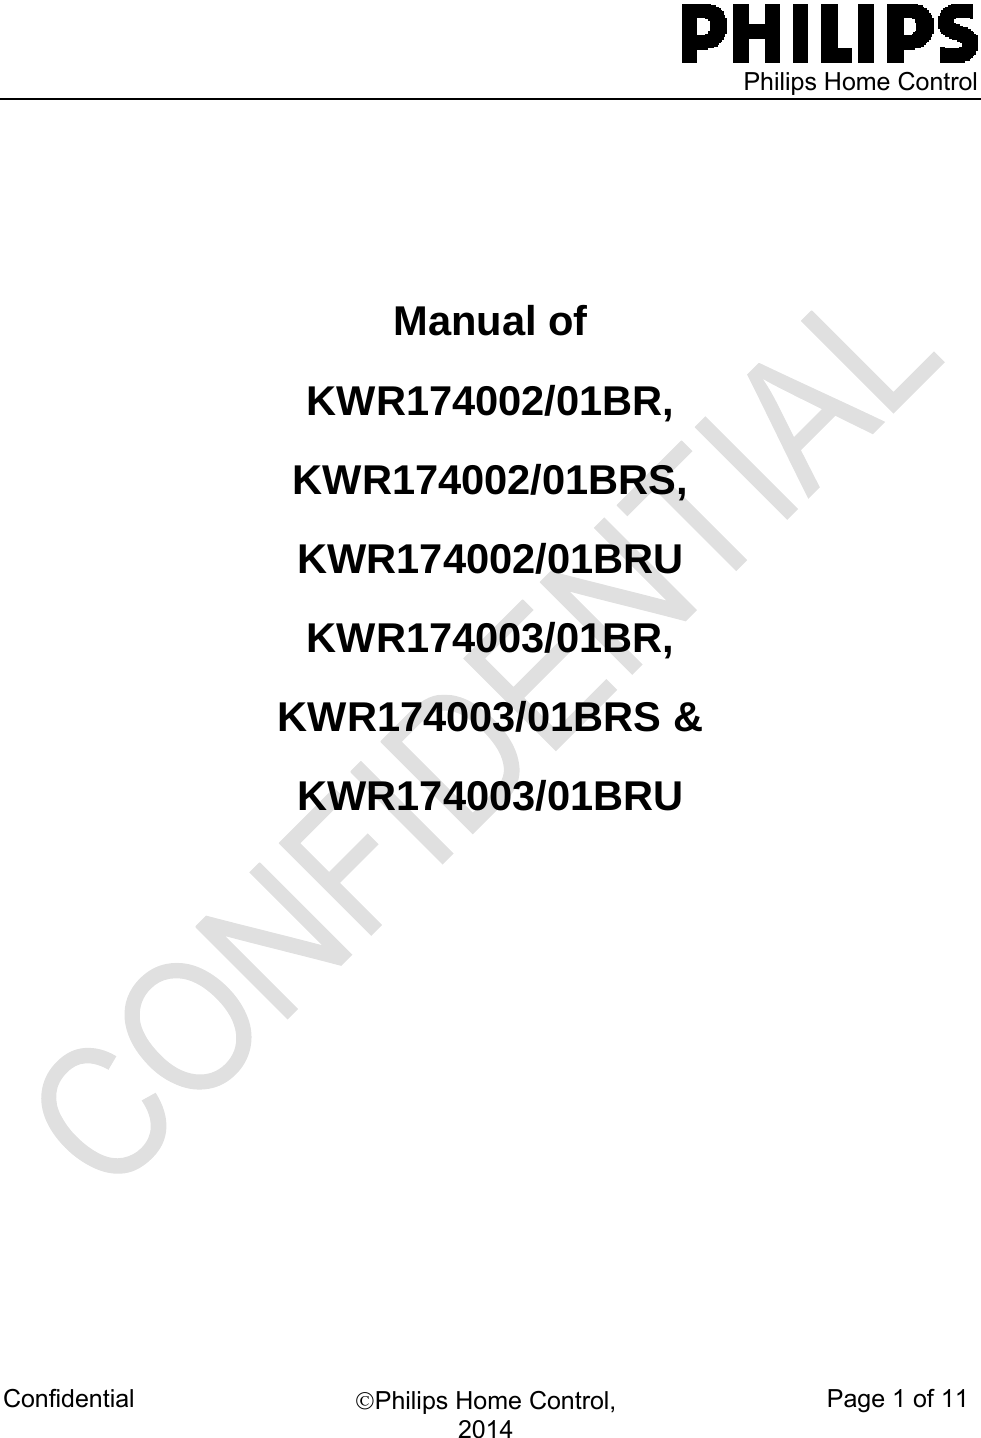    Philips Home Control Confidential  Philips Home Control, 2014 Page 1 of 11   Manual of  KWR174002/01BR,  KWR174002/01BRS,  KWR174002/01BRU KWR174003/01BR,  KWR174003/01BRS &amp;  KWR174003/01BRU                                                         